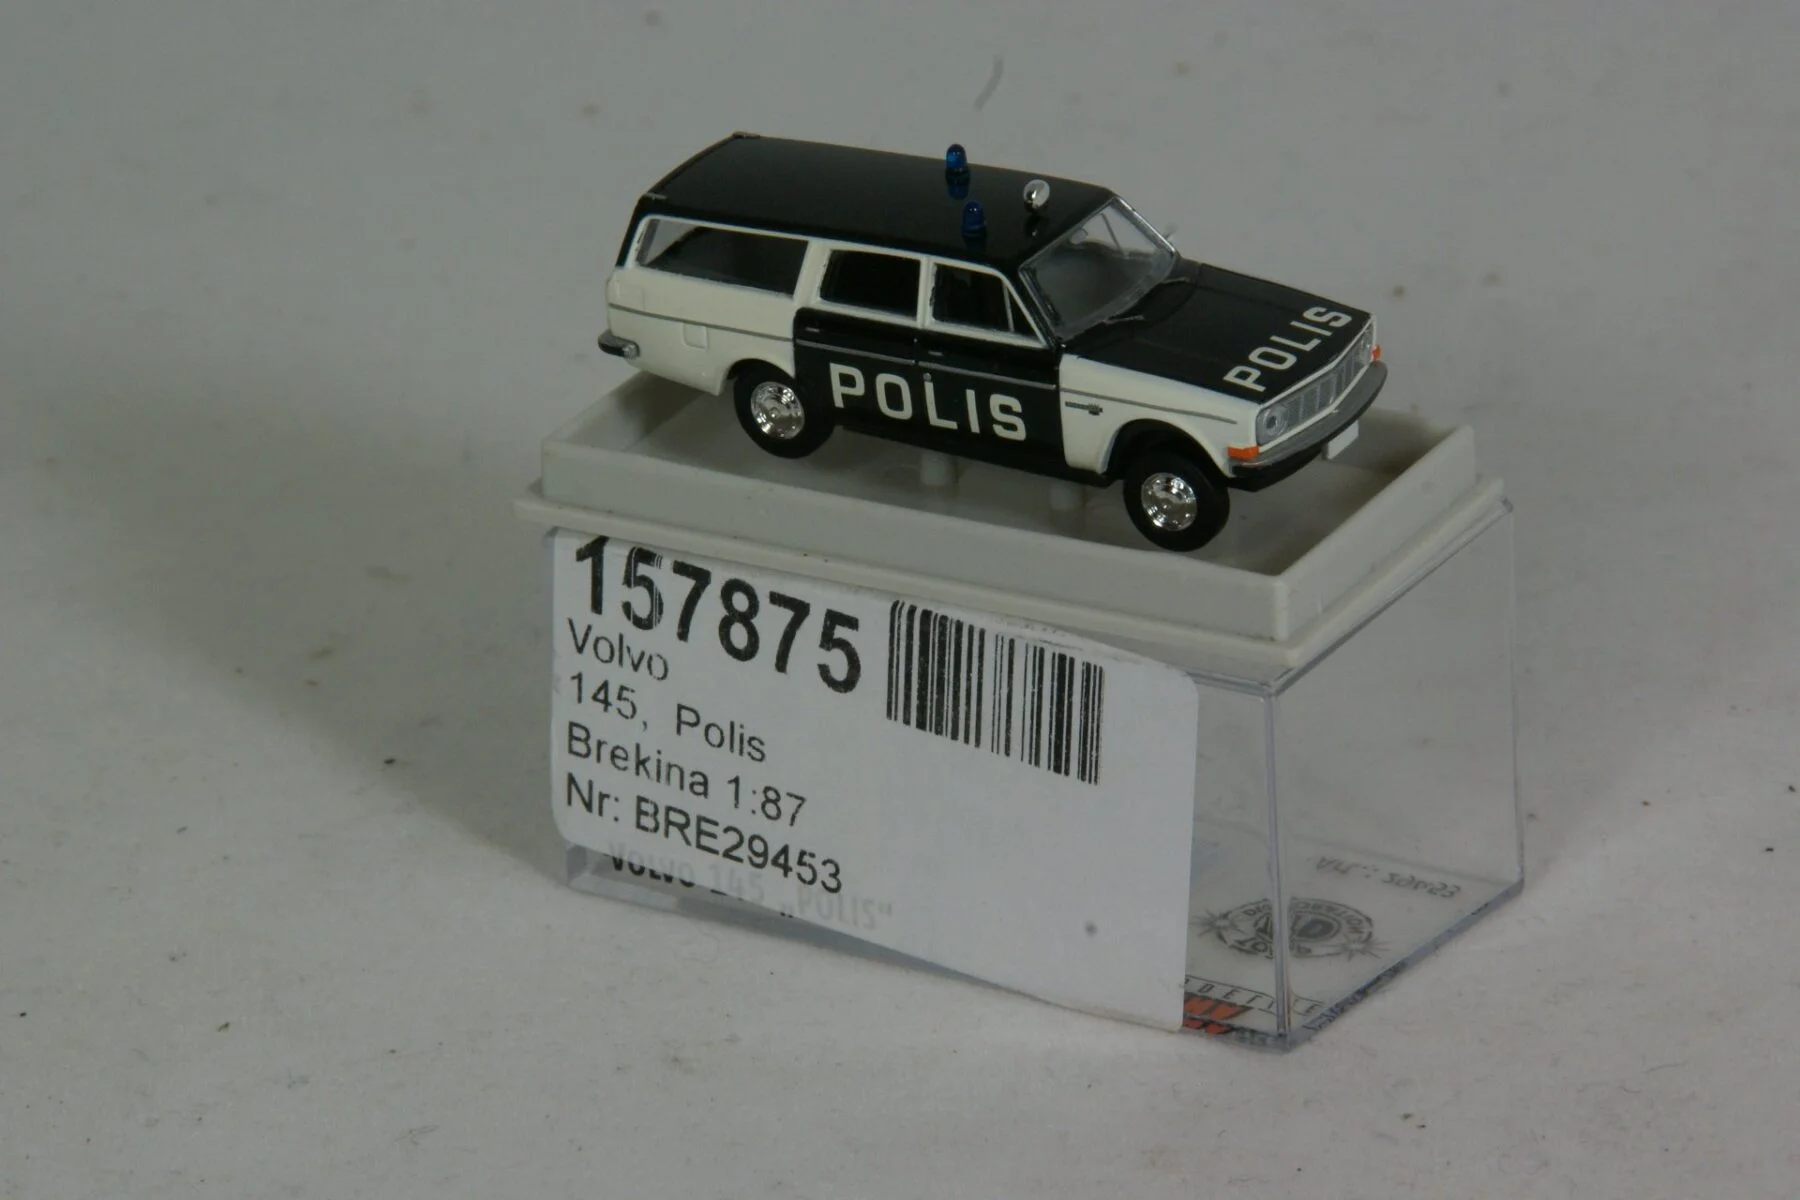 DSC00745 miniatuur Volvo 145 polis 1op87 Brekina 157875 MB